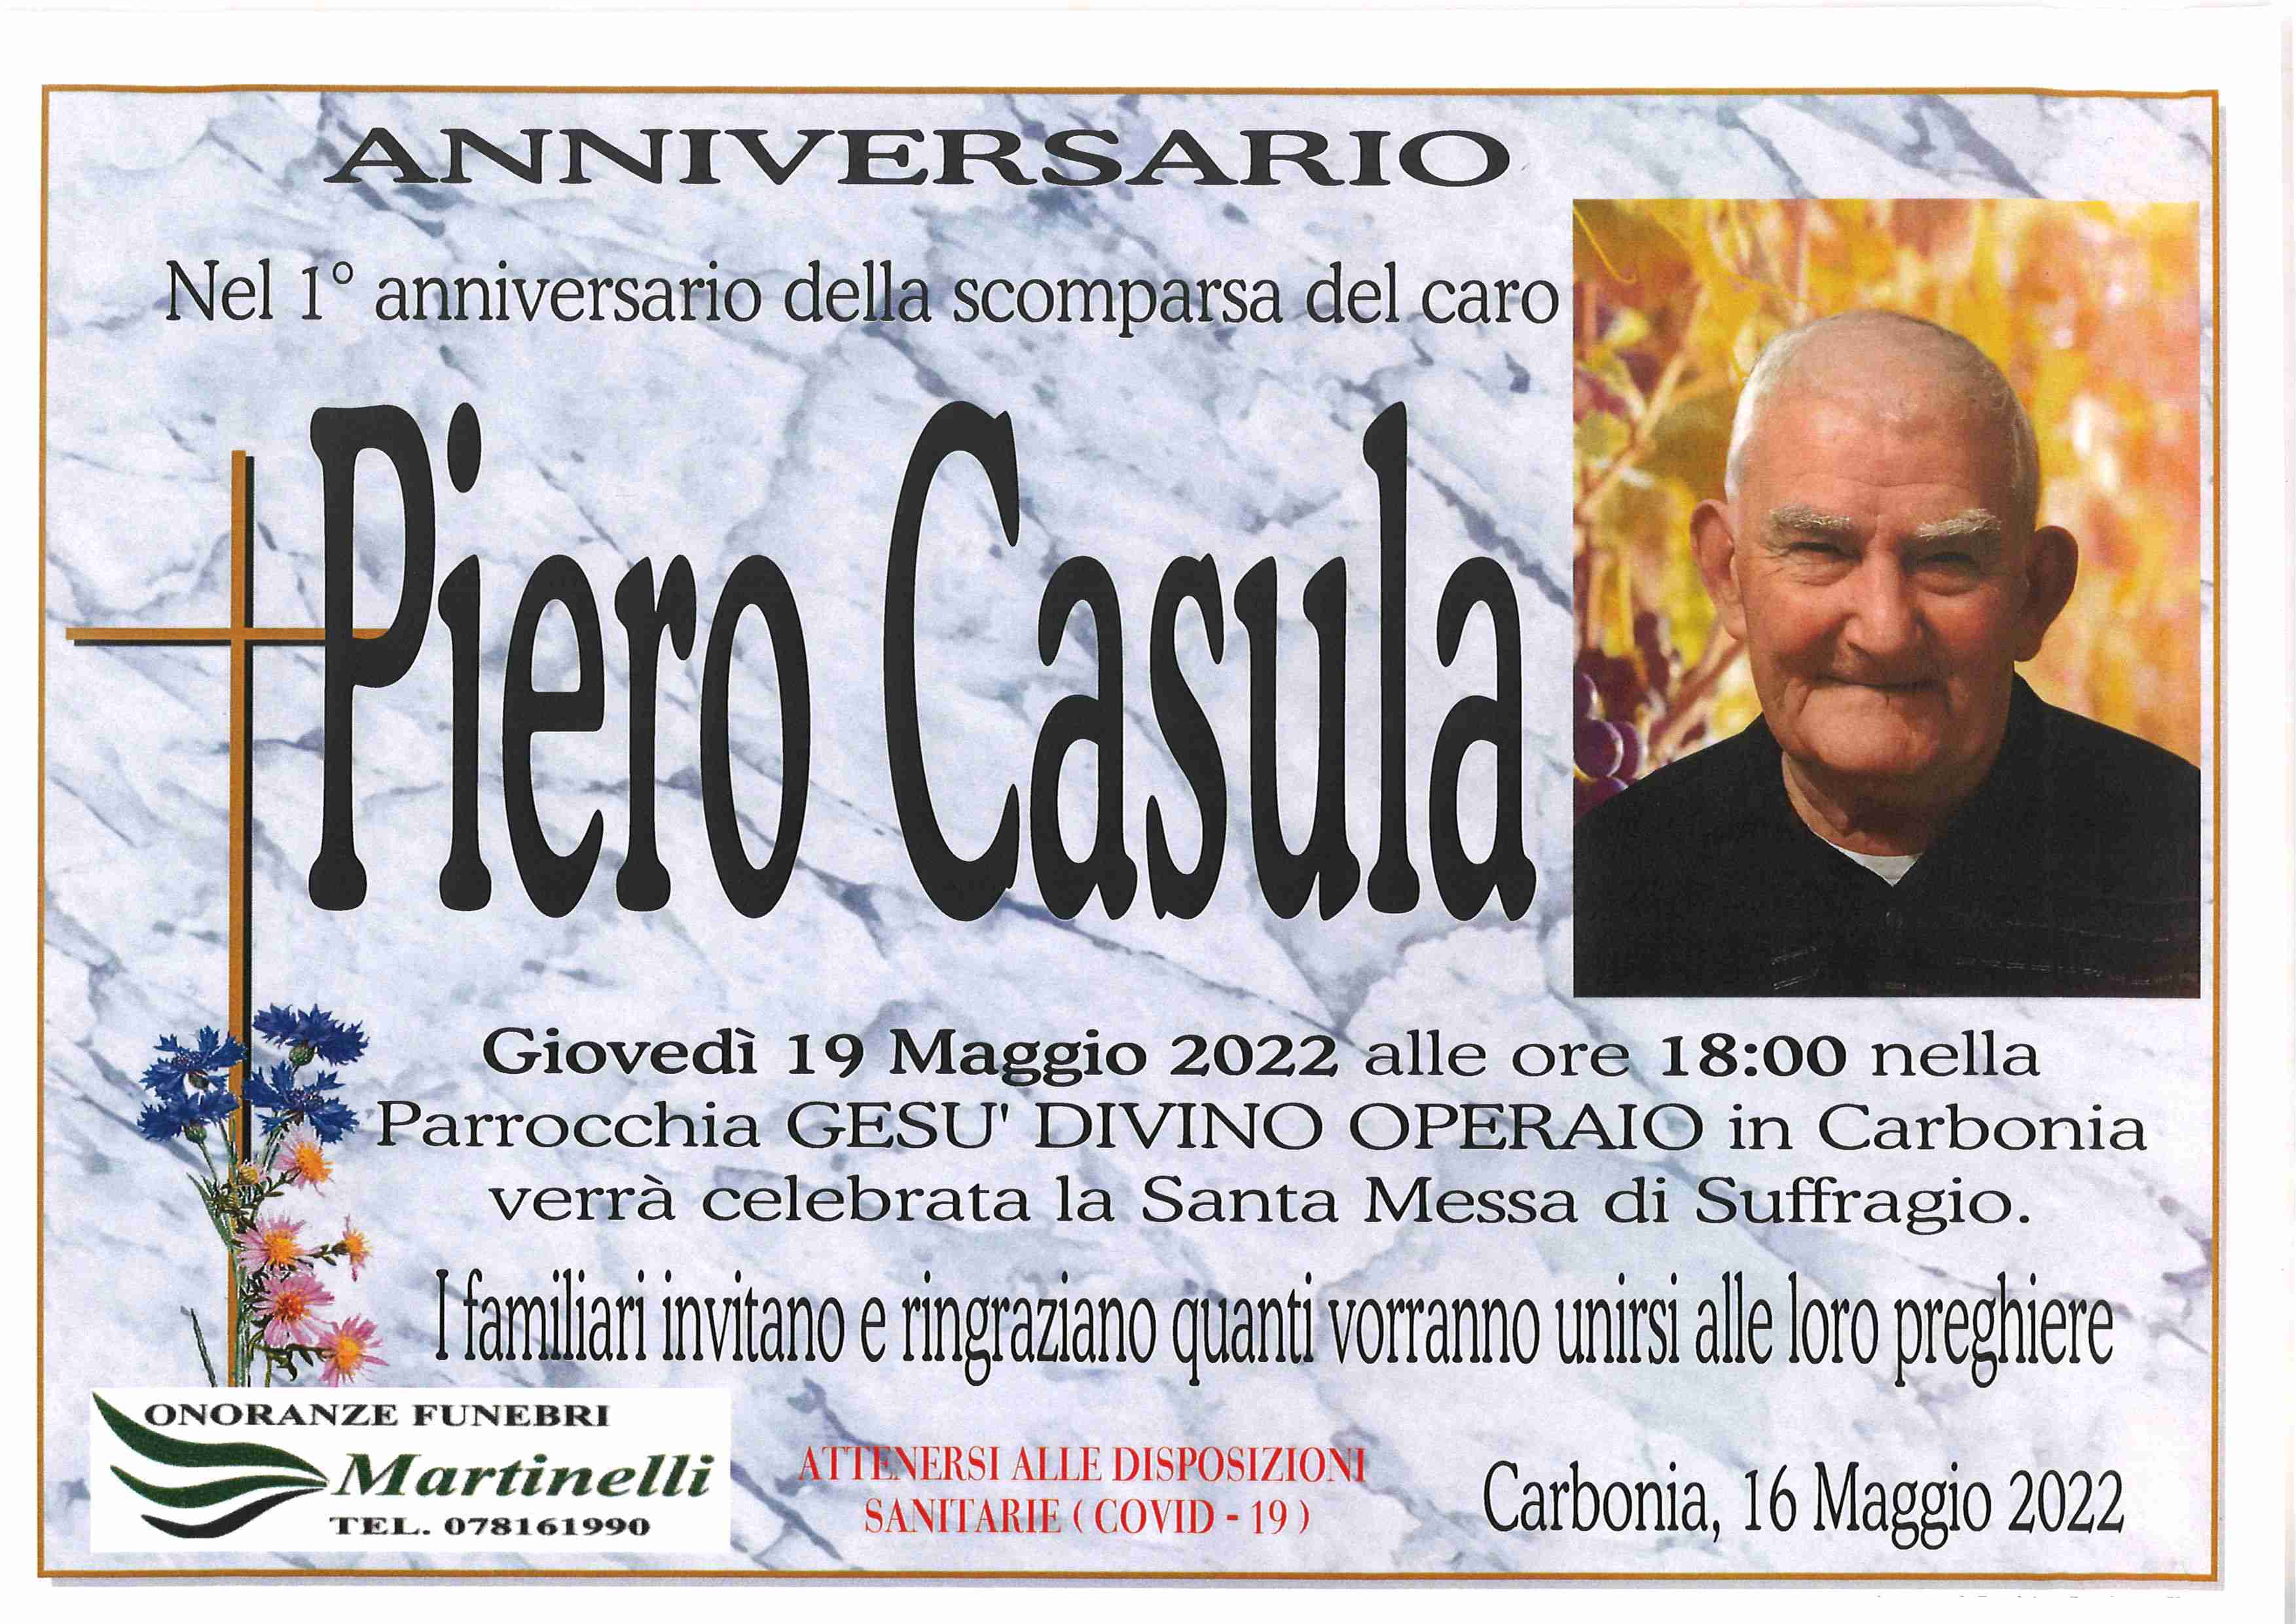 Piero Casula